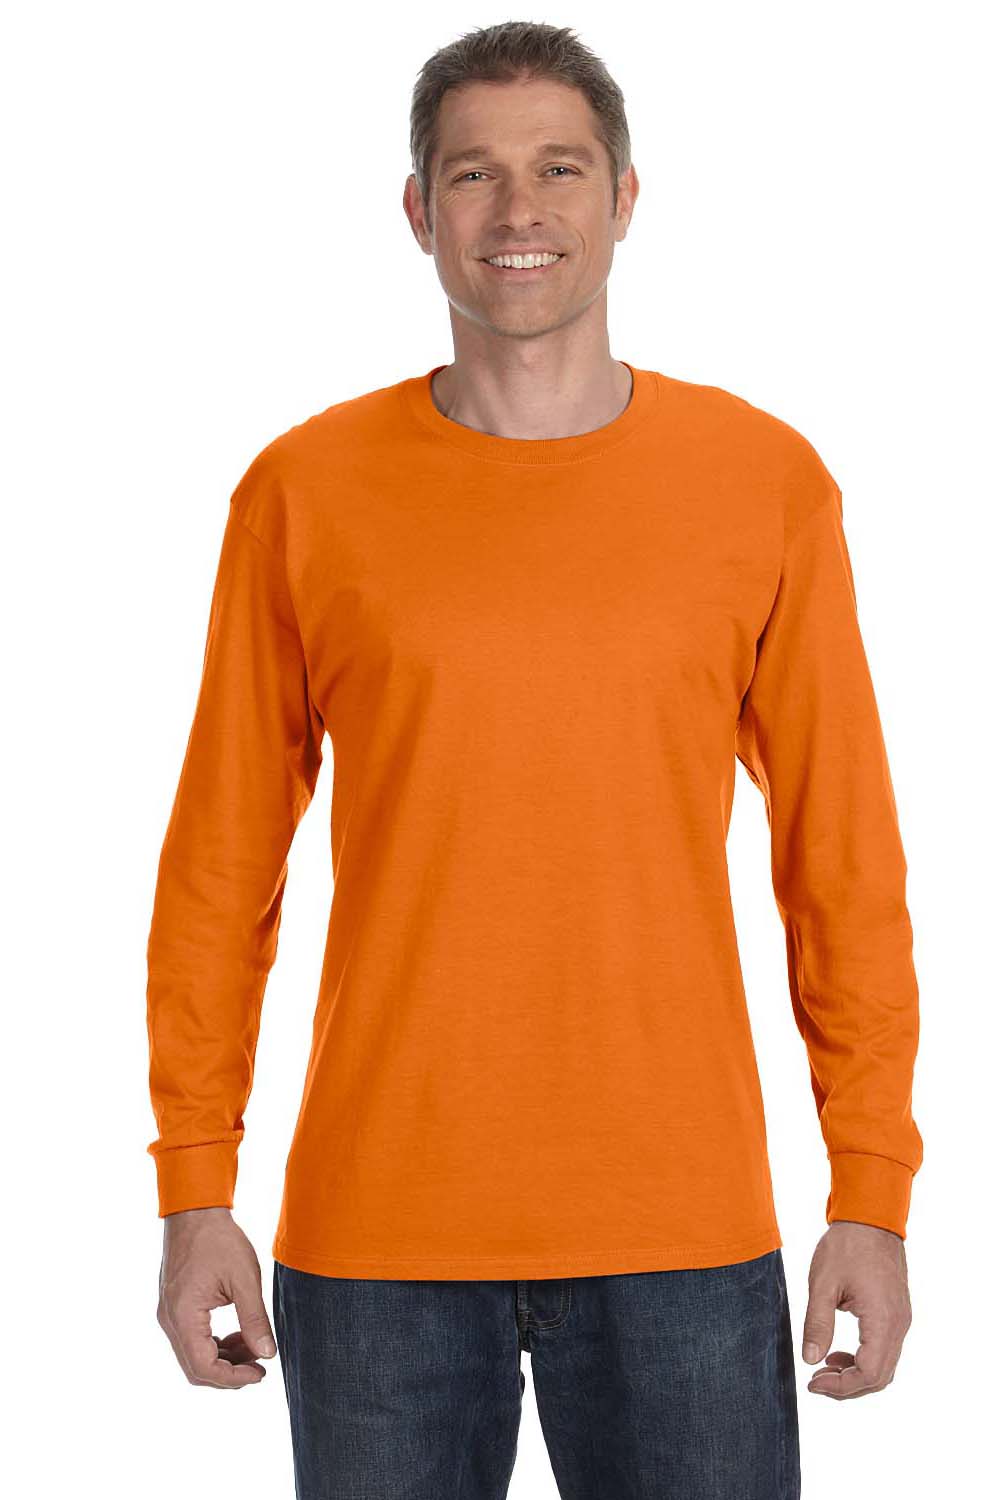 Hanes 5586 Mens ComfortSoft Long Sleeve Crewneck T-Shirt Orange Front